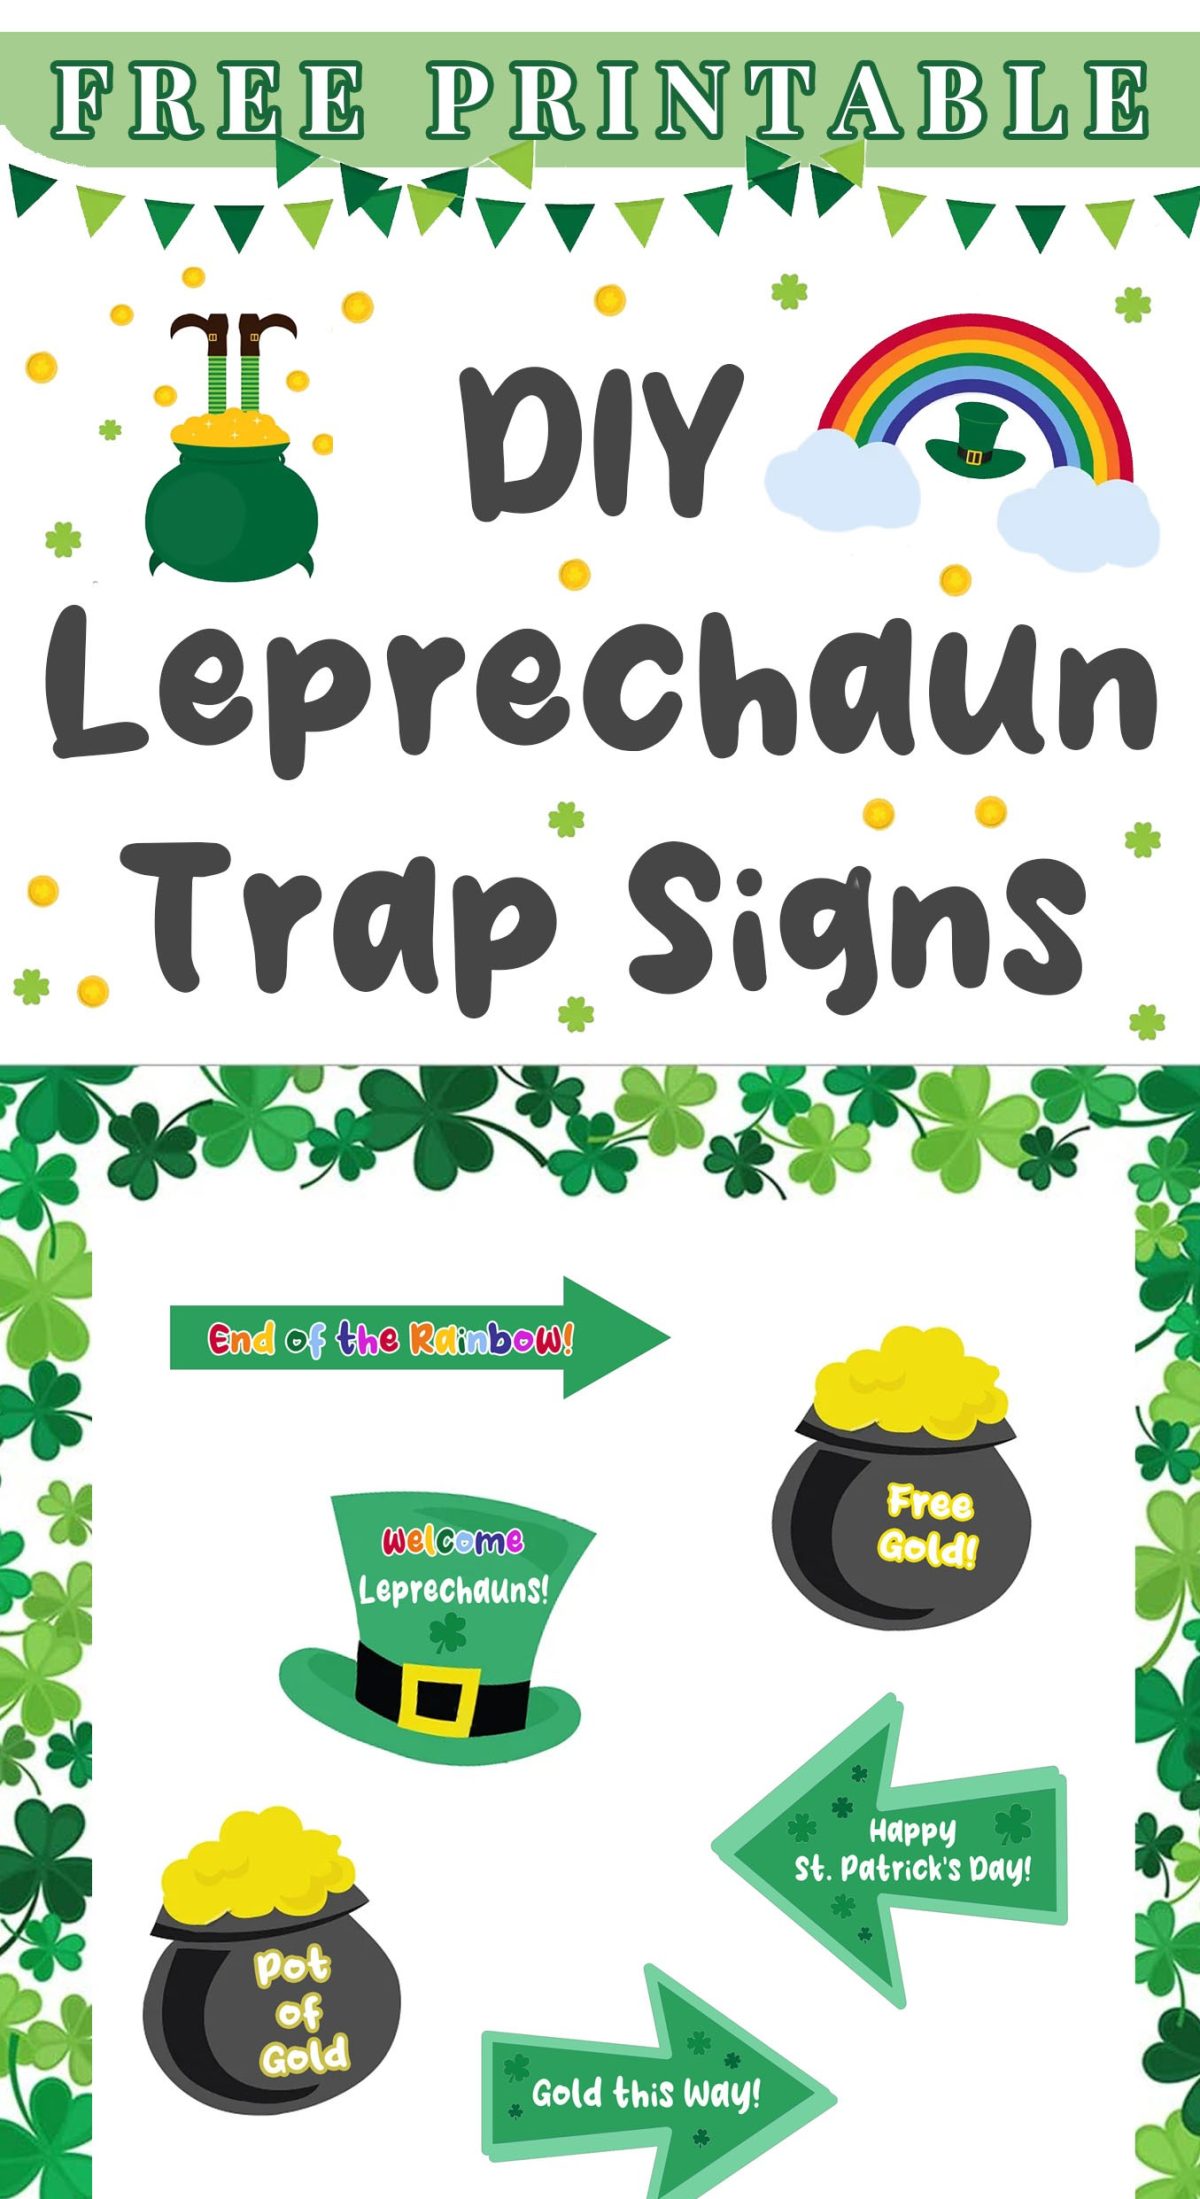 9 Leprechaun Trap ideas  leprechaun trap, leprechaun, st patrick's day  crafts